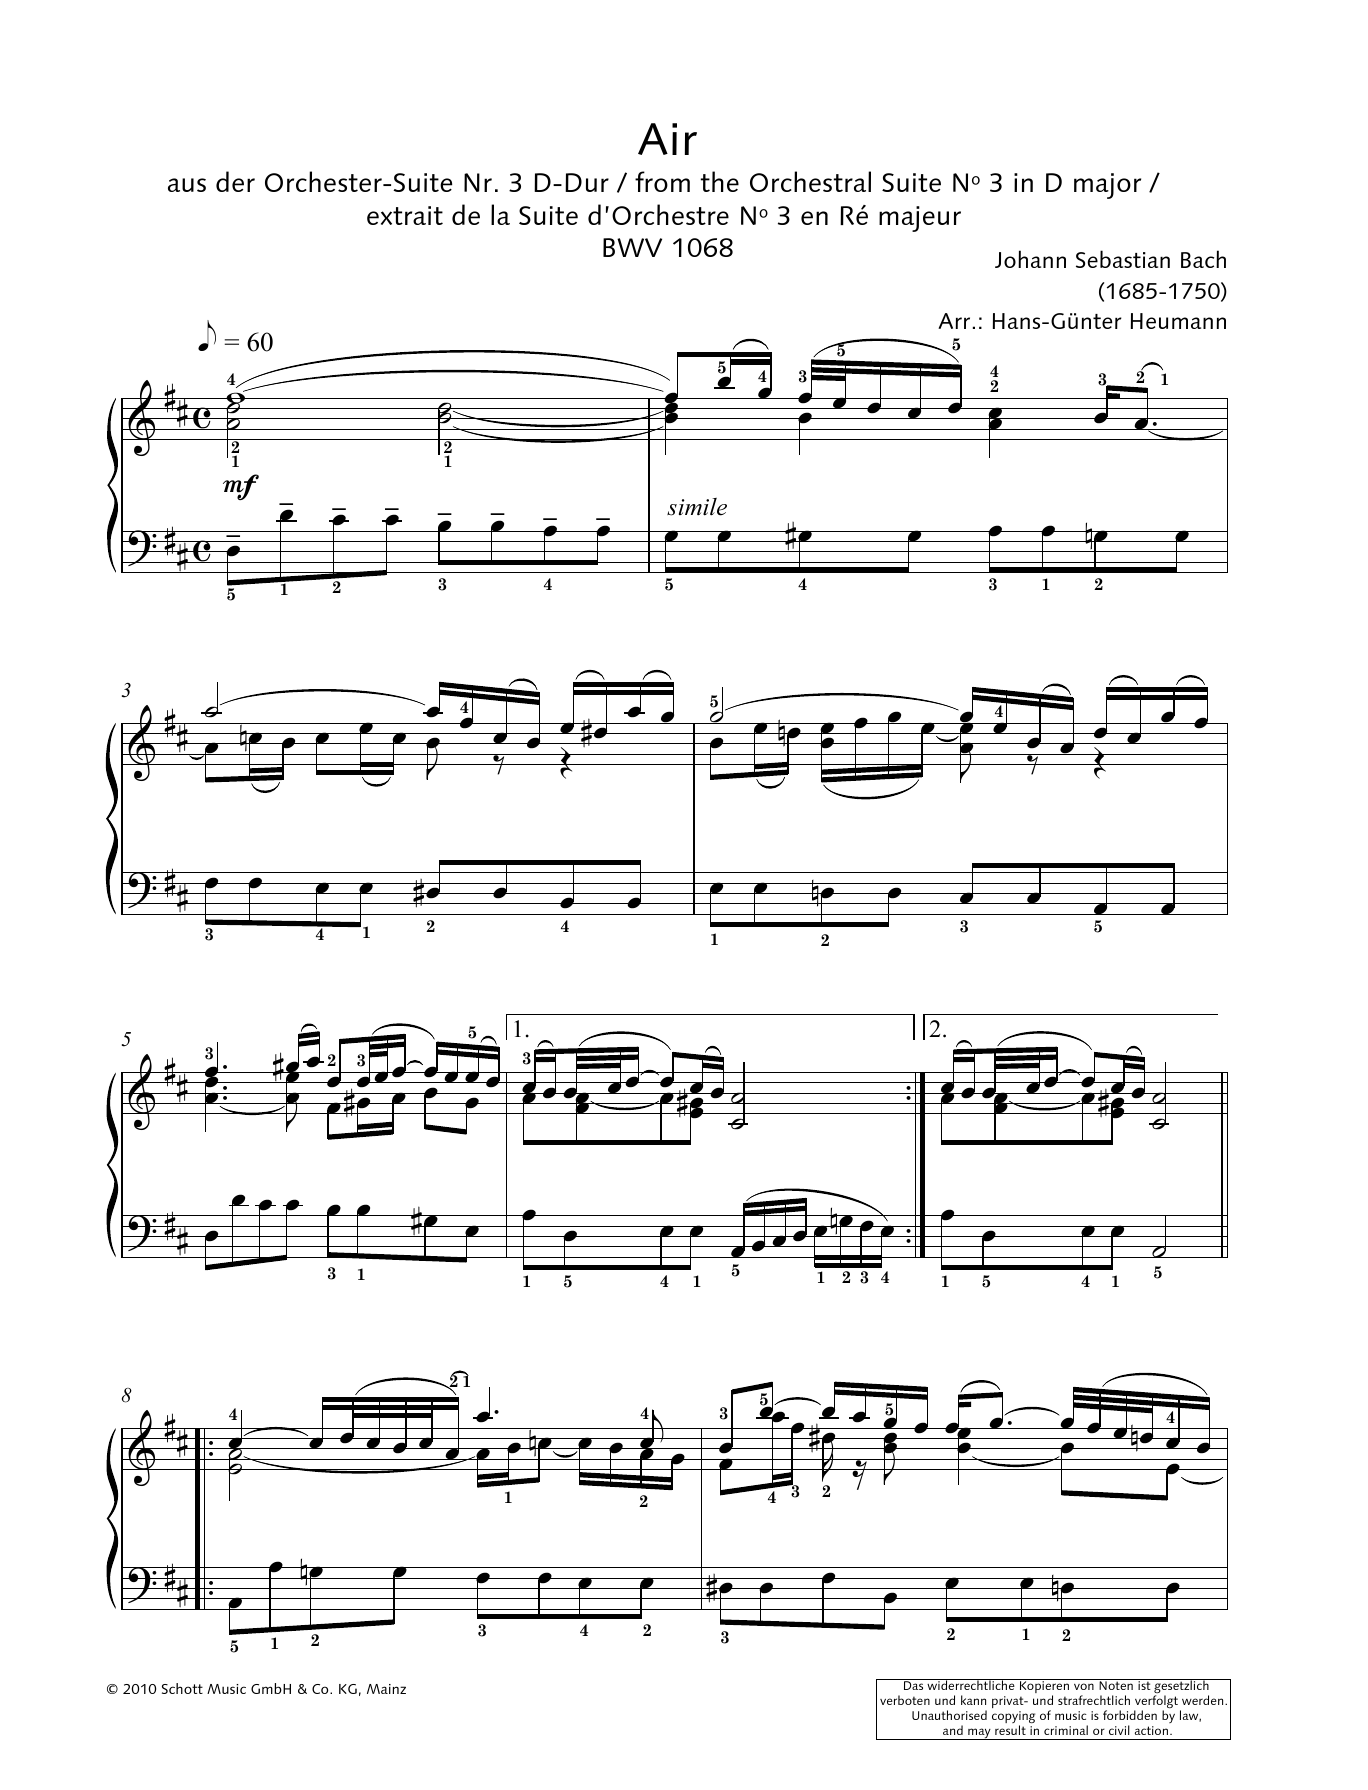 Johann Sebastian Bach Air Sheet Music Notes & Chords for Woodwind Solo - Download or Print PDF